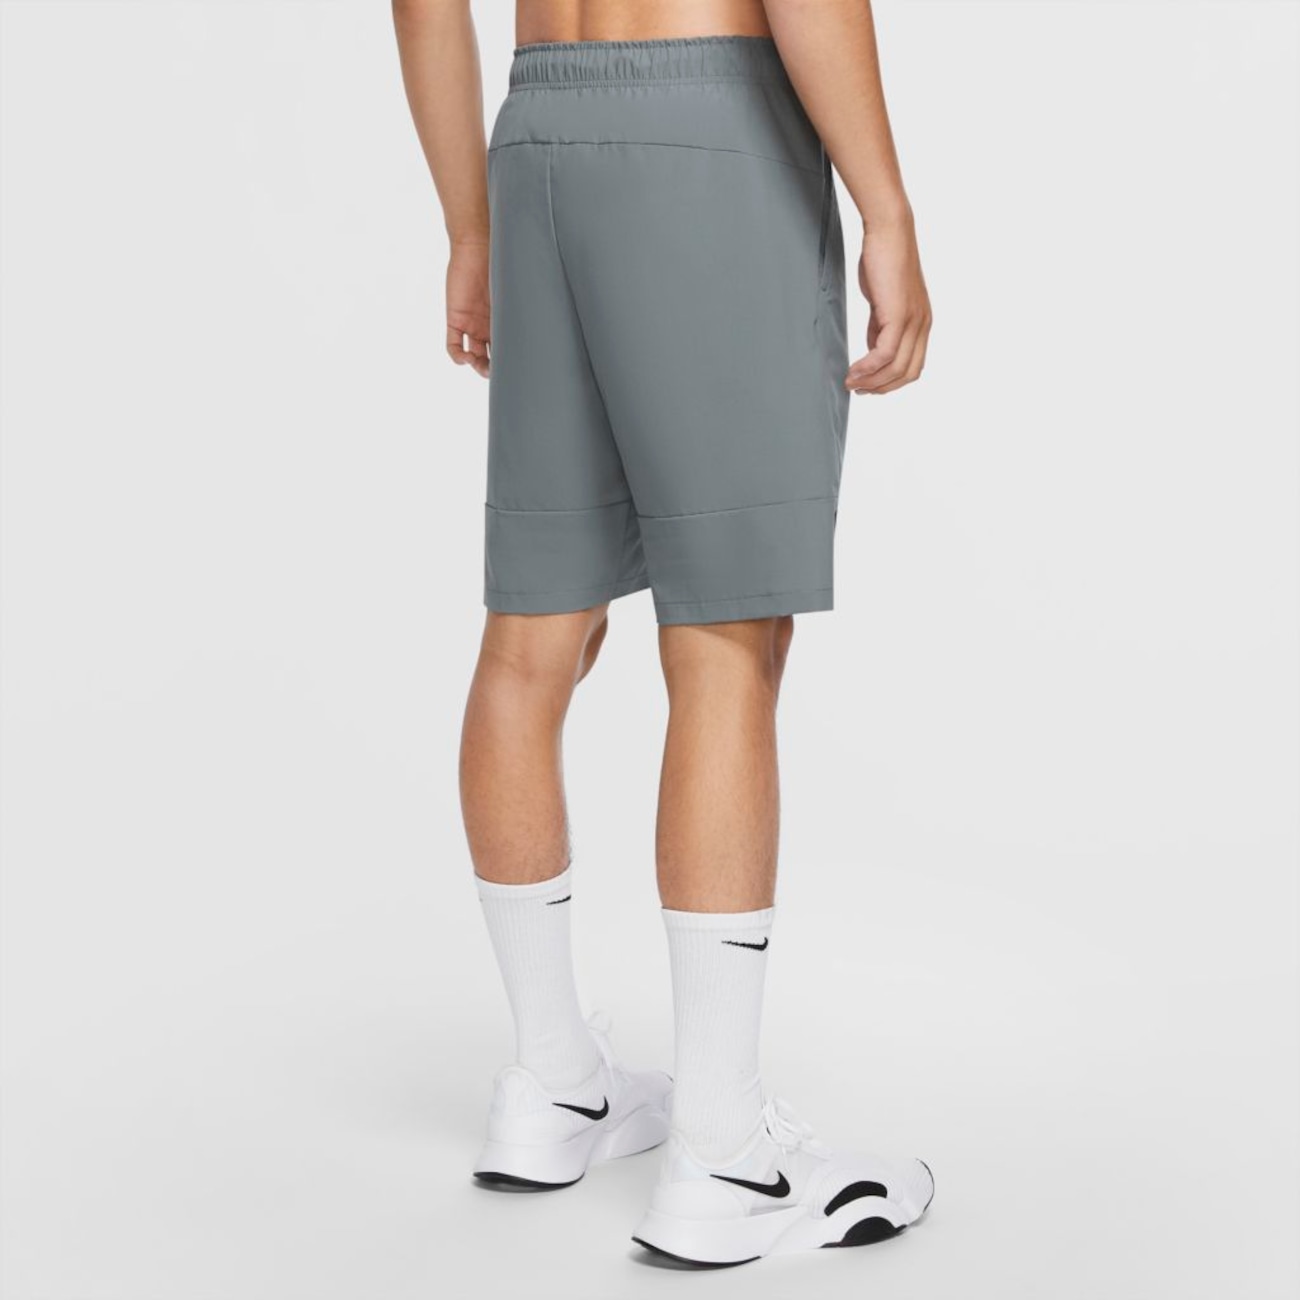 Shorts Nike Flex Masculino - Foto 2